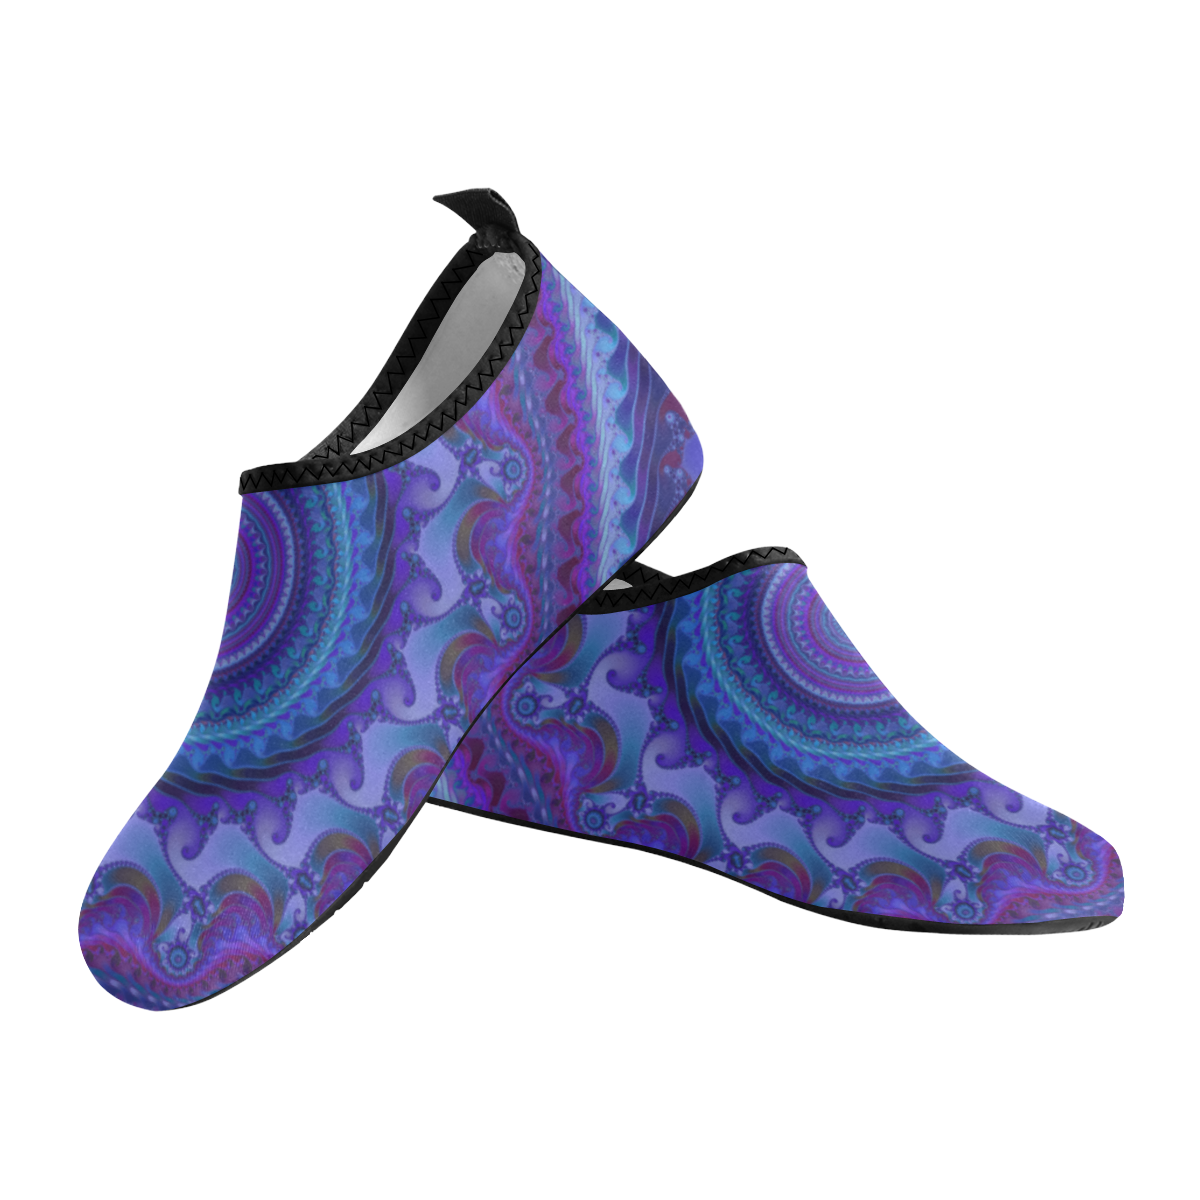 MANDALA PASSION OF LOVE Men's Slip-On Water Shoes (Model 056)